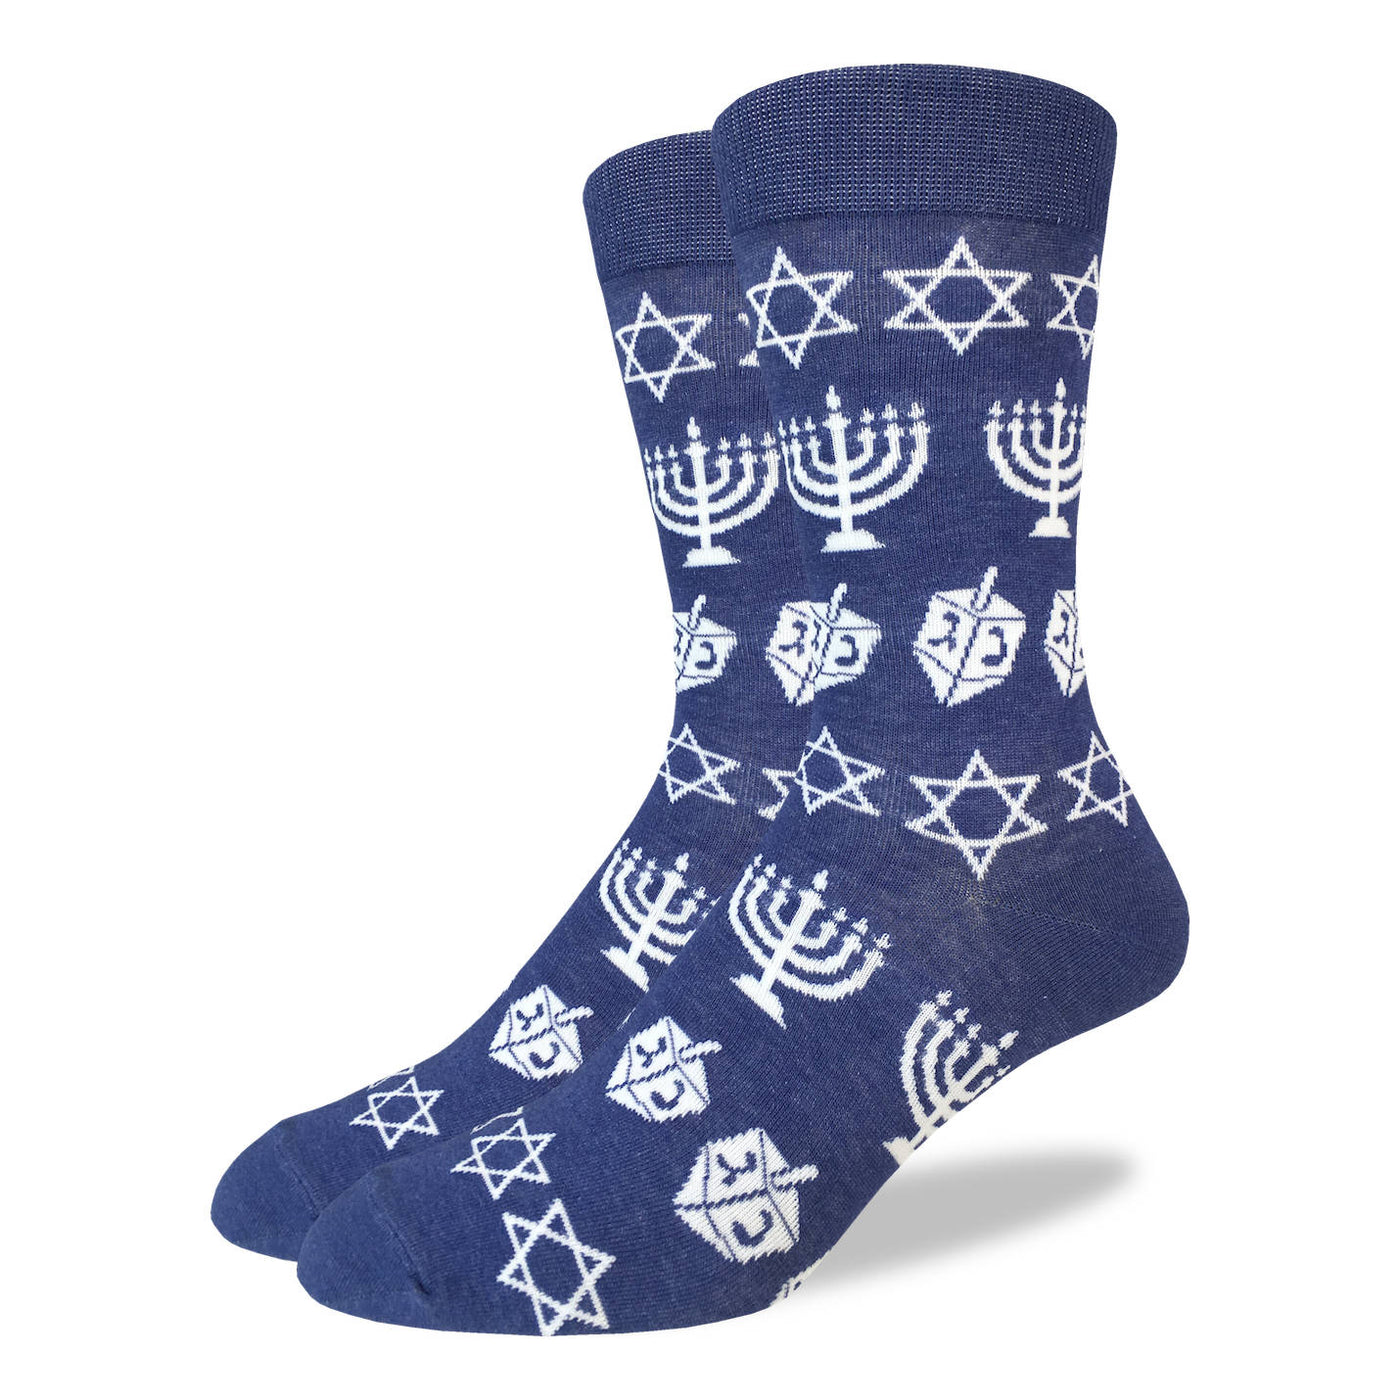 "Hanukkah" Crew Socks by Good Luck Sock